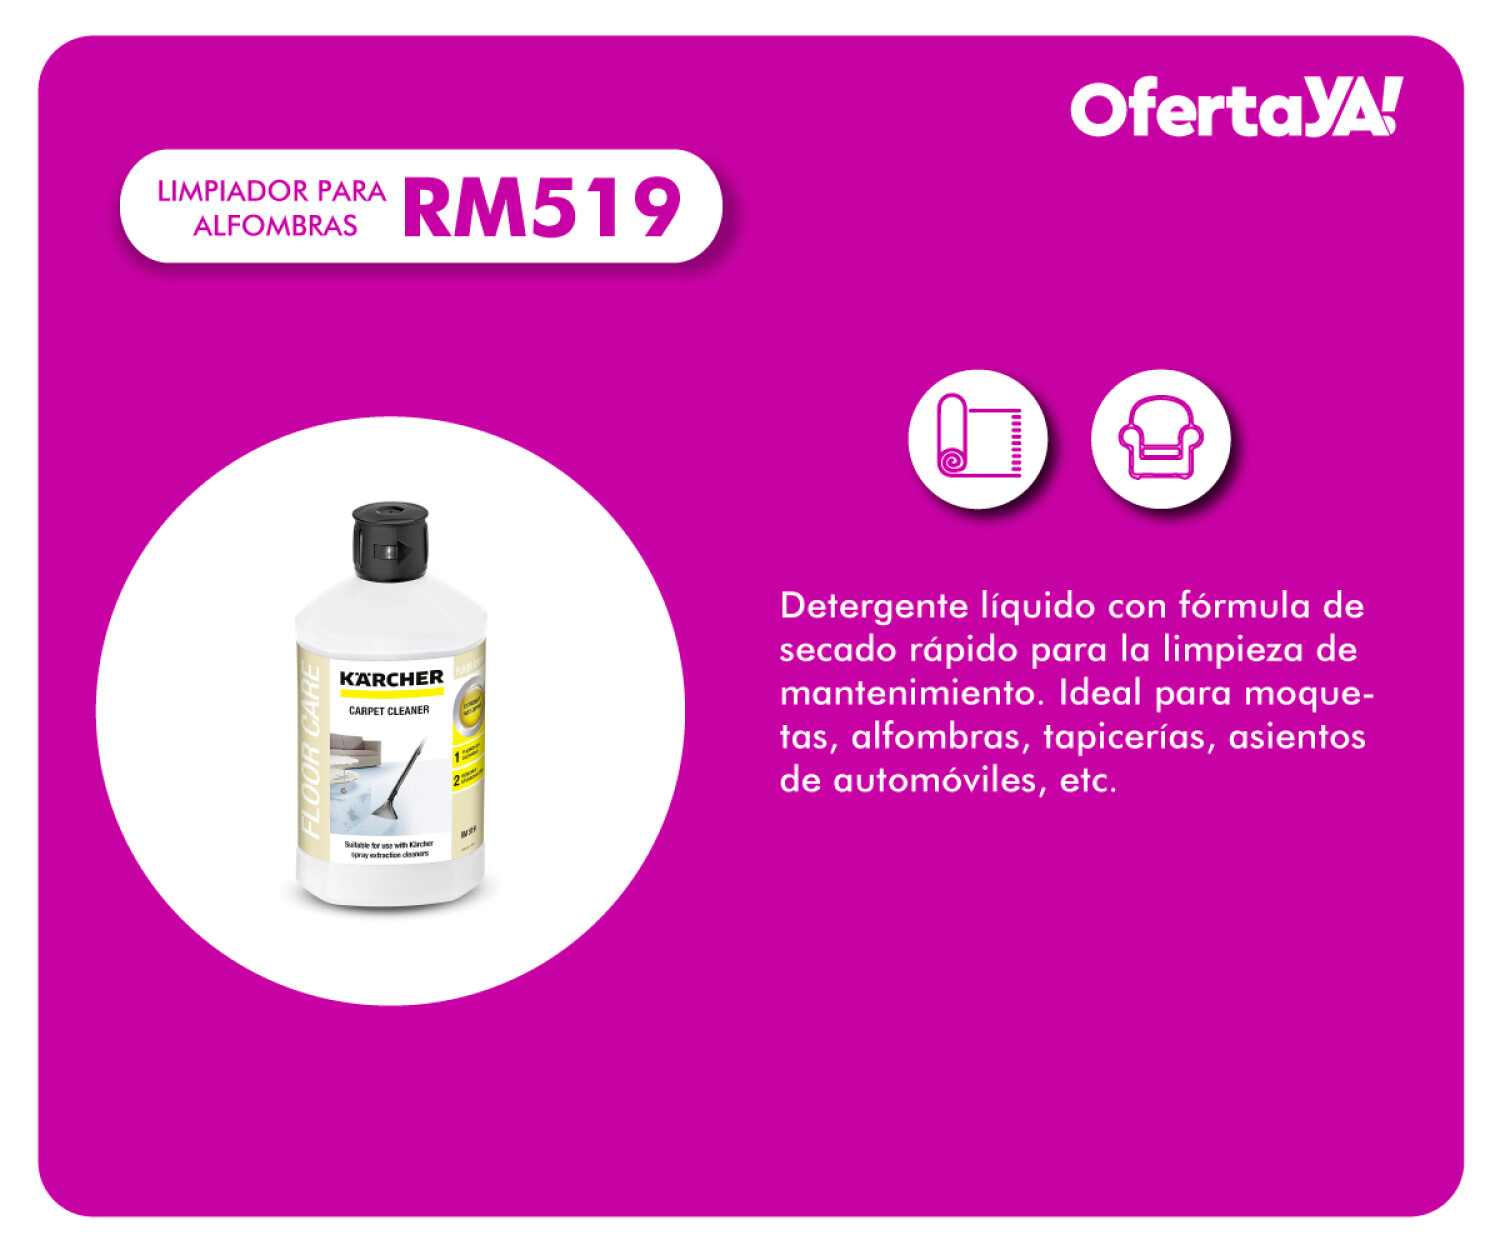 Detergente Limpiador Alfombras Karcher RM 519 SE4001 — OfertaYa